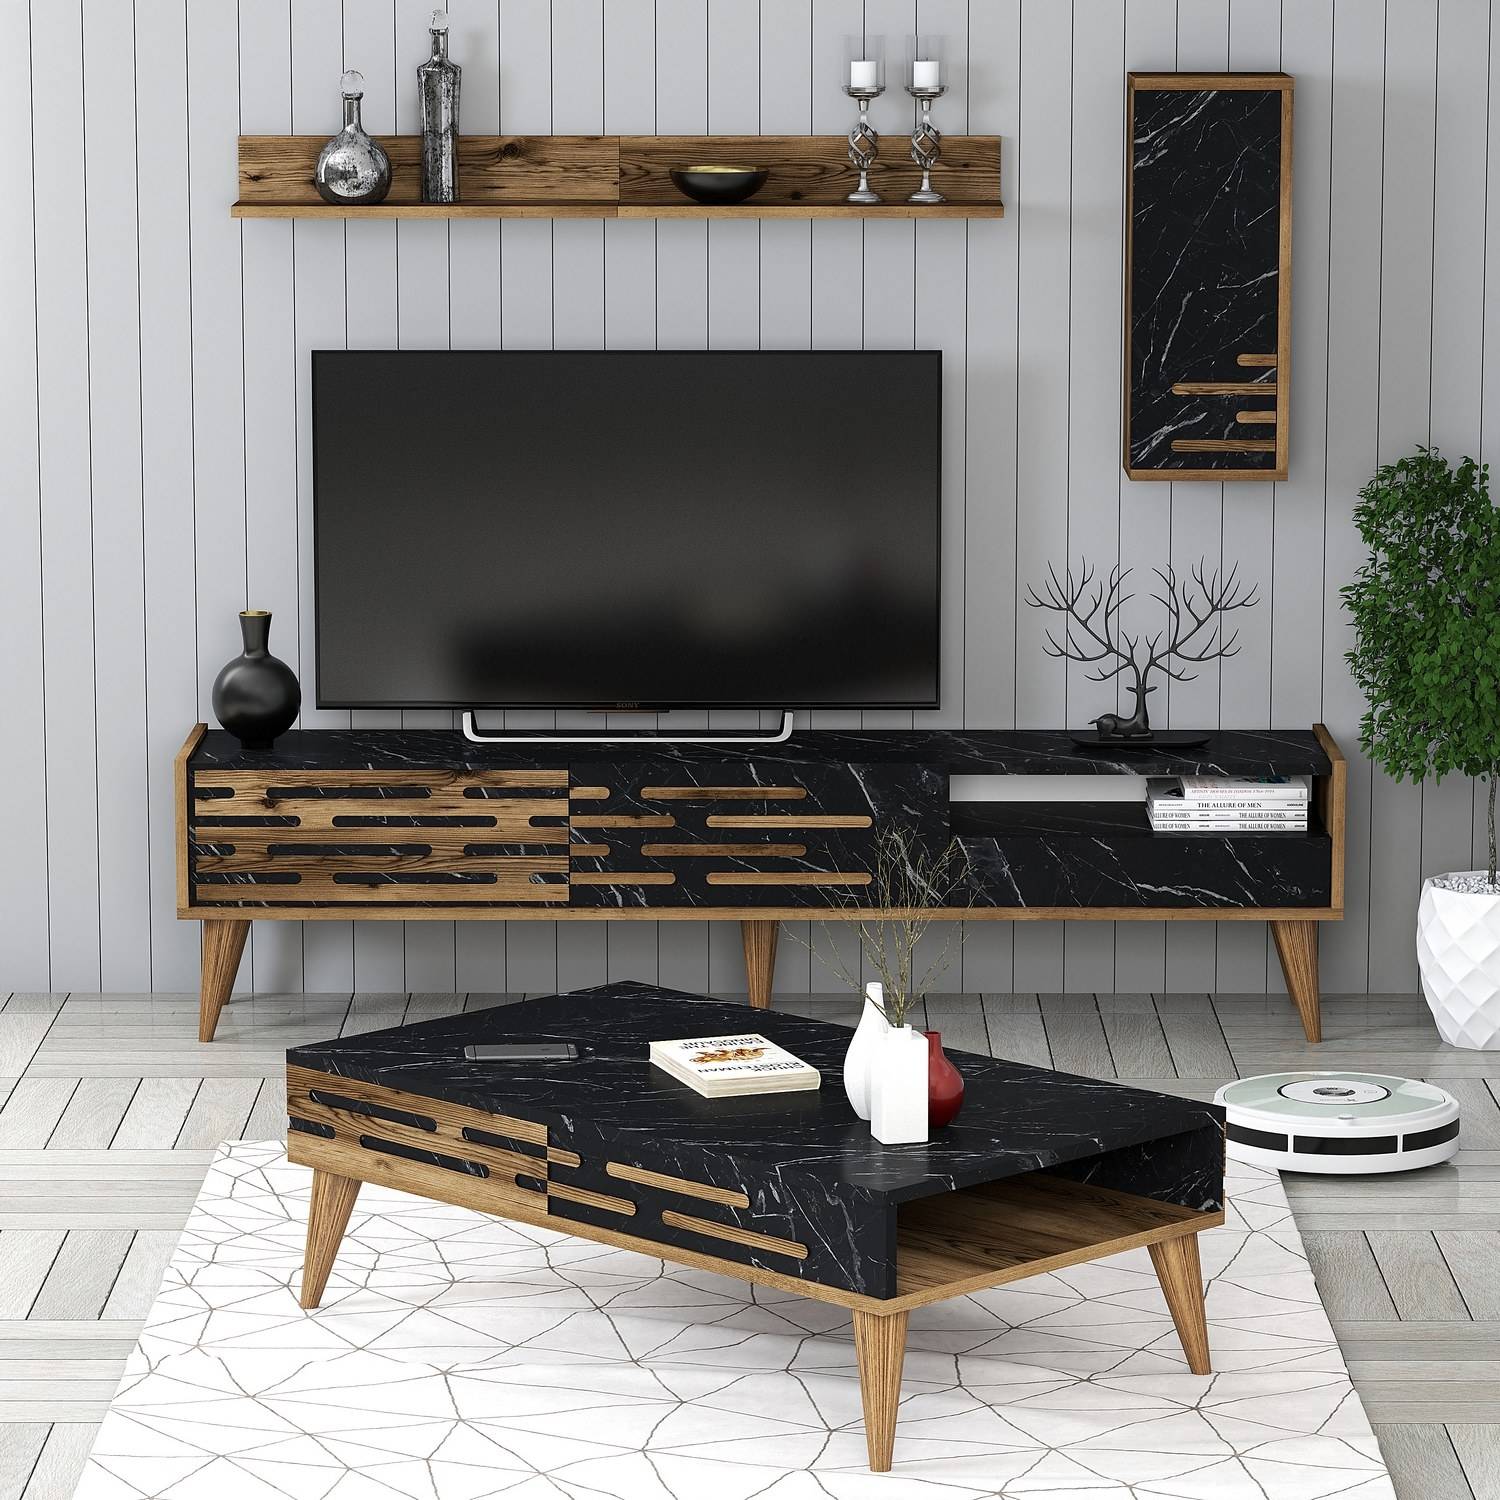 Oviva-meubelset in donker hout en zwart marmereffect